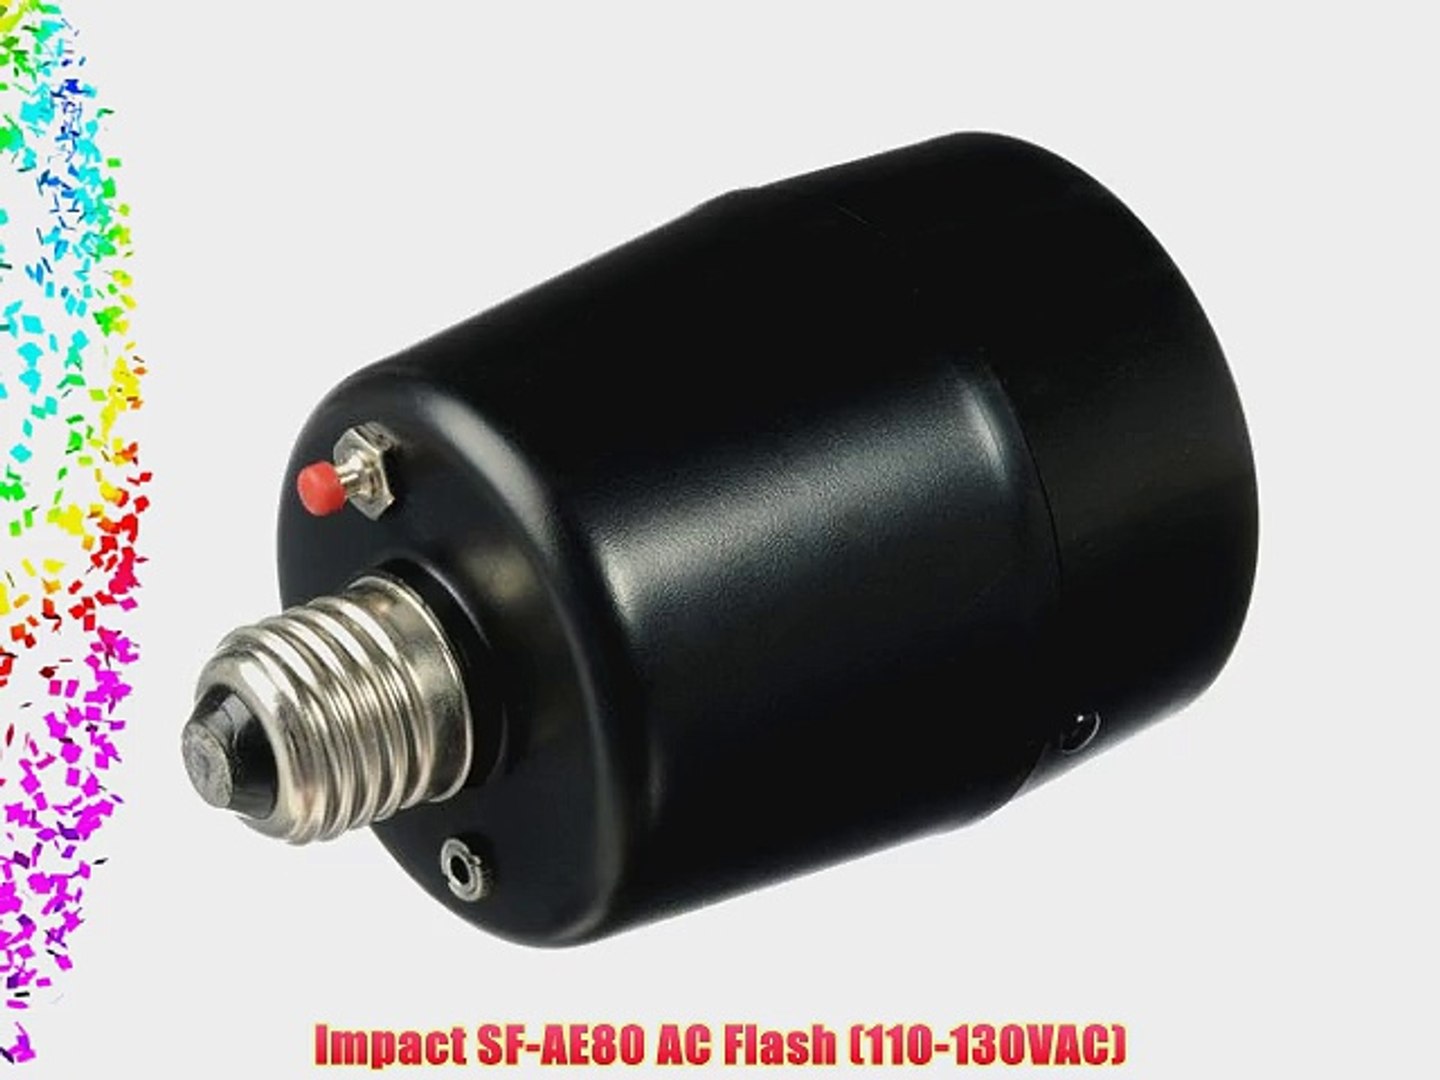 Impact SF-AE80 AC Master/Slave 2 Flash Kit 110-130VAC 